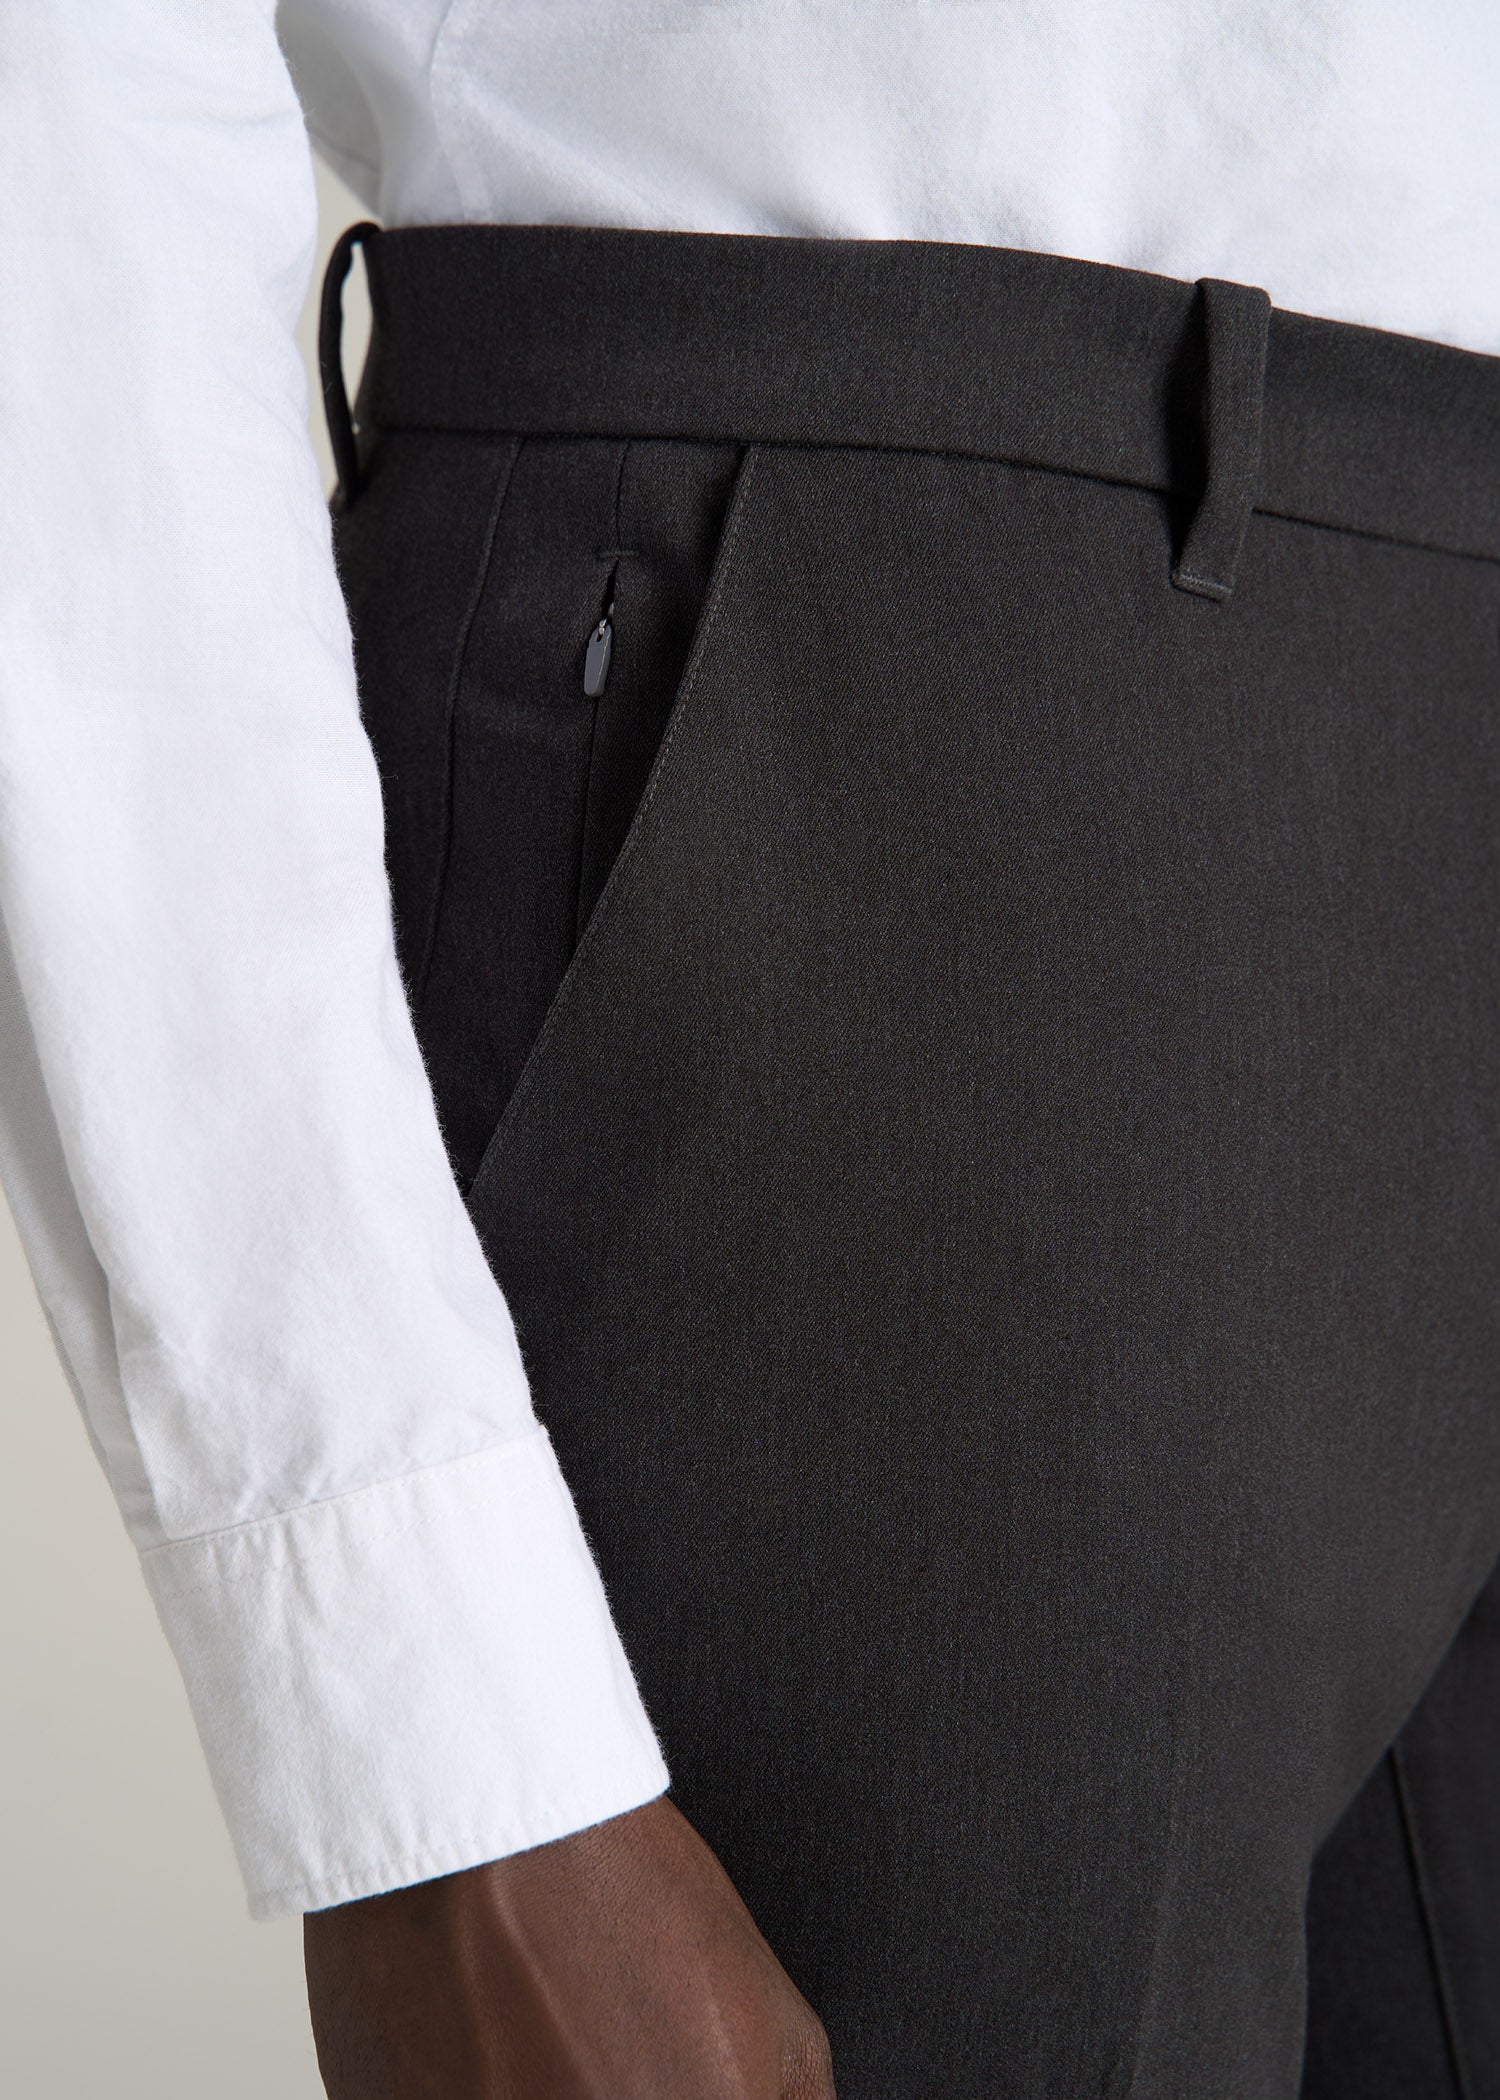 Men's dress pant INC grey slim fit size 34x32 polyester/rayon mix | eBay